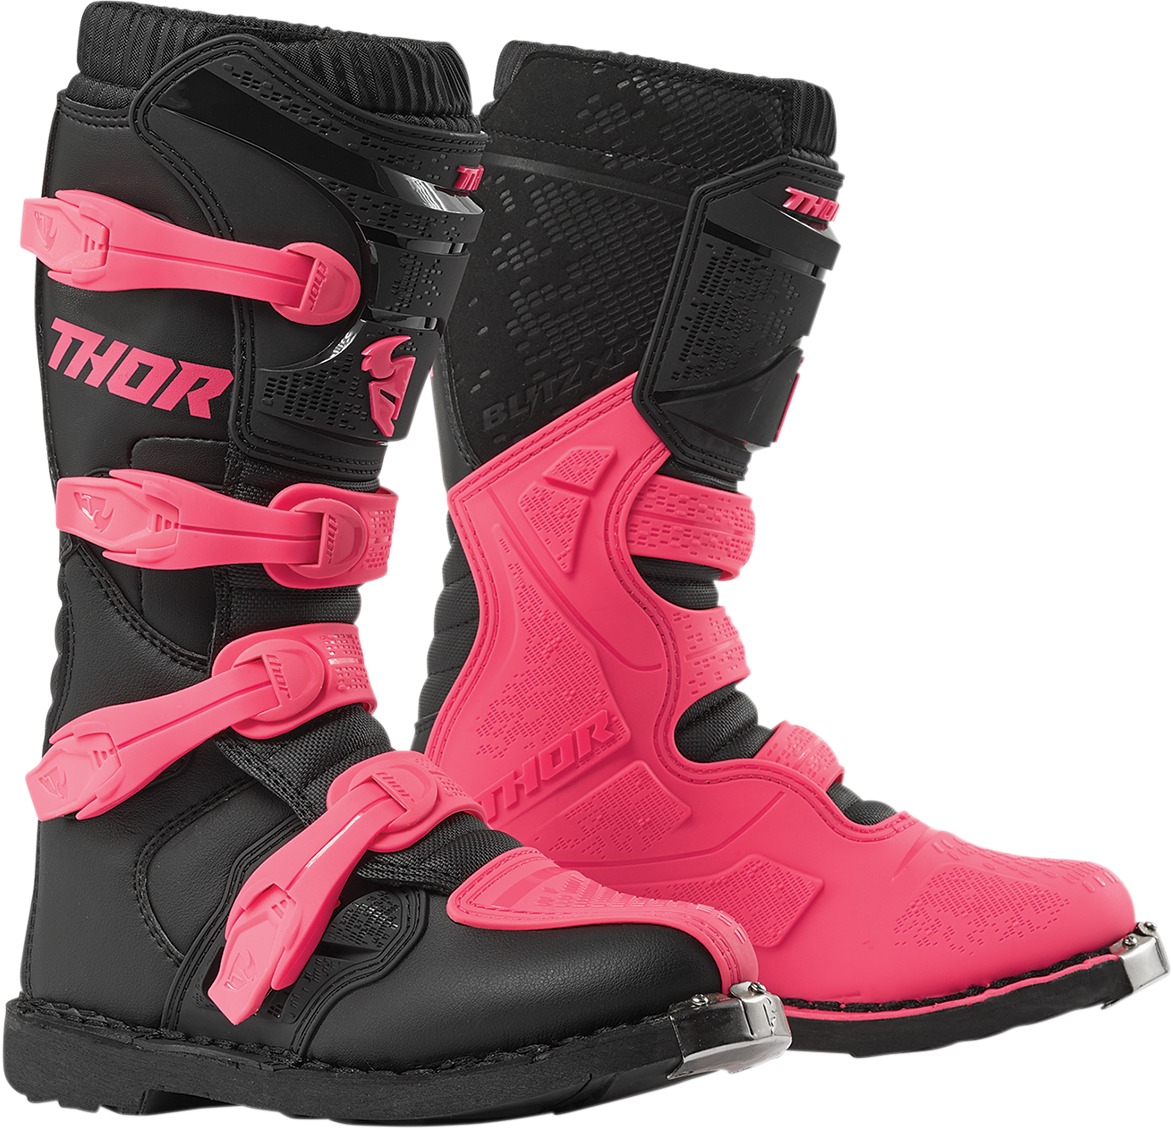 Blitz XP Dirt Bike Boots - Black & Pink Women's Size 5 - Click Image to Close